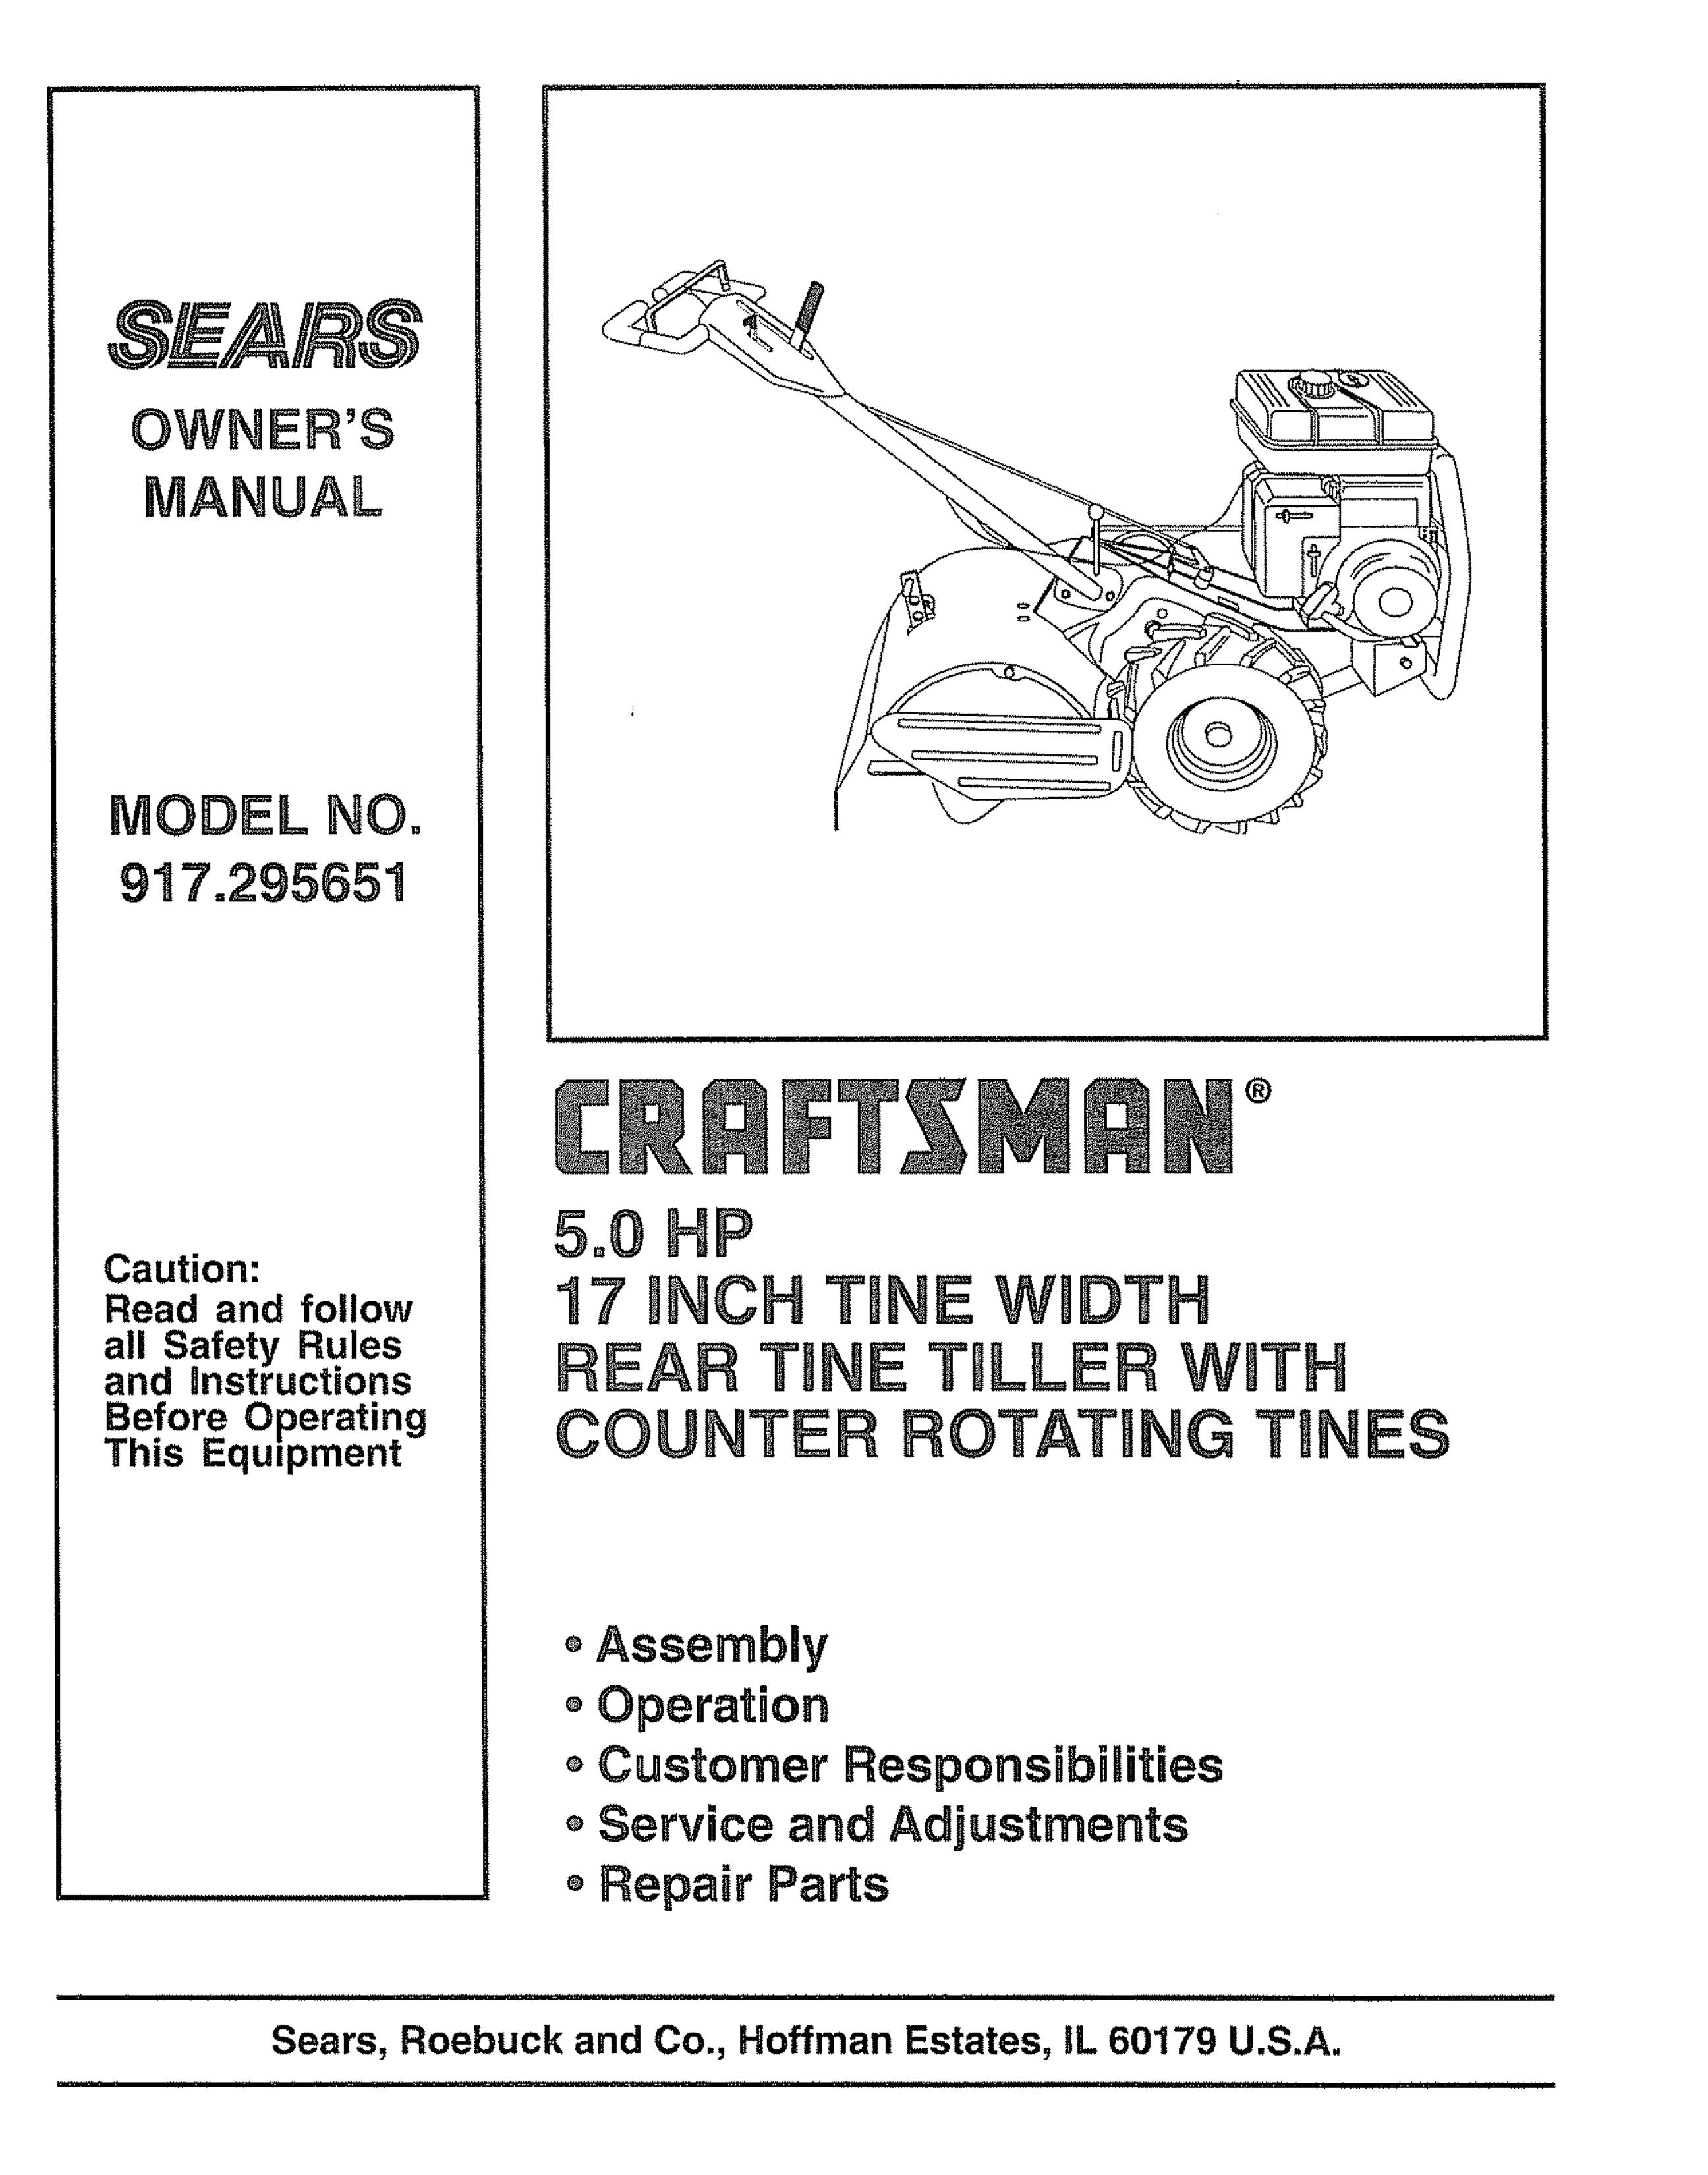 Craftsman 917.295651 Tiller User Manual